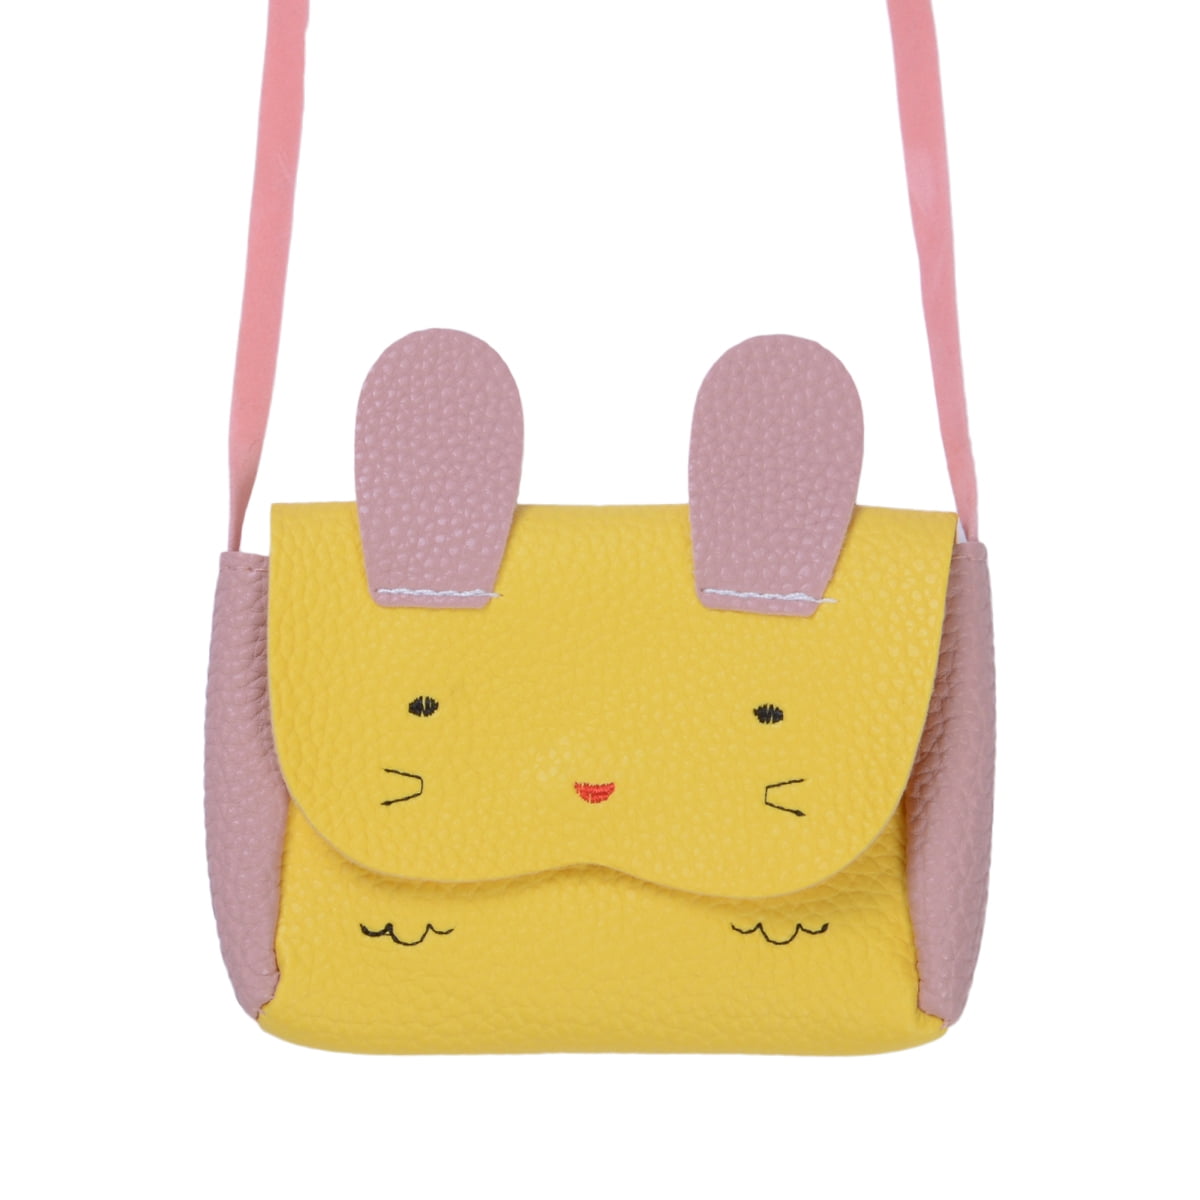 Carolilly Mini Coin Purse for Kids Cartoon Animal Shaped Handbag Shoulder Bag Toddlers Crossbody Bag for Girls 